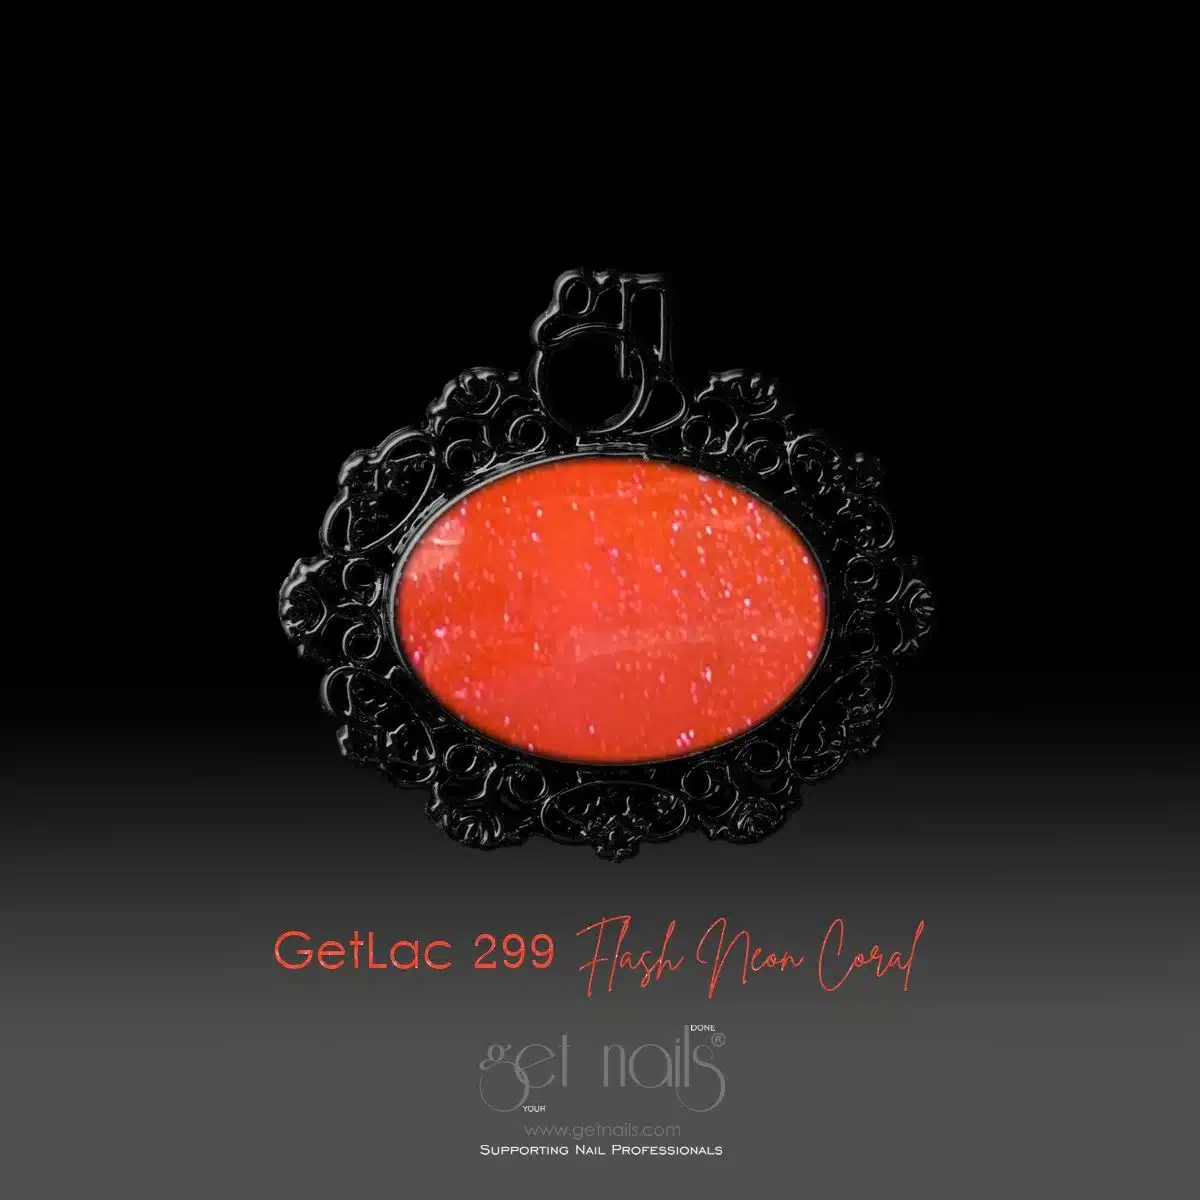 Get Nails Austria - GetLac 299 Flash Neon Coral 15g